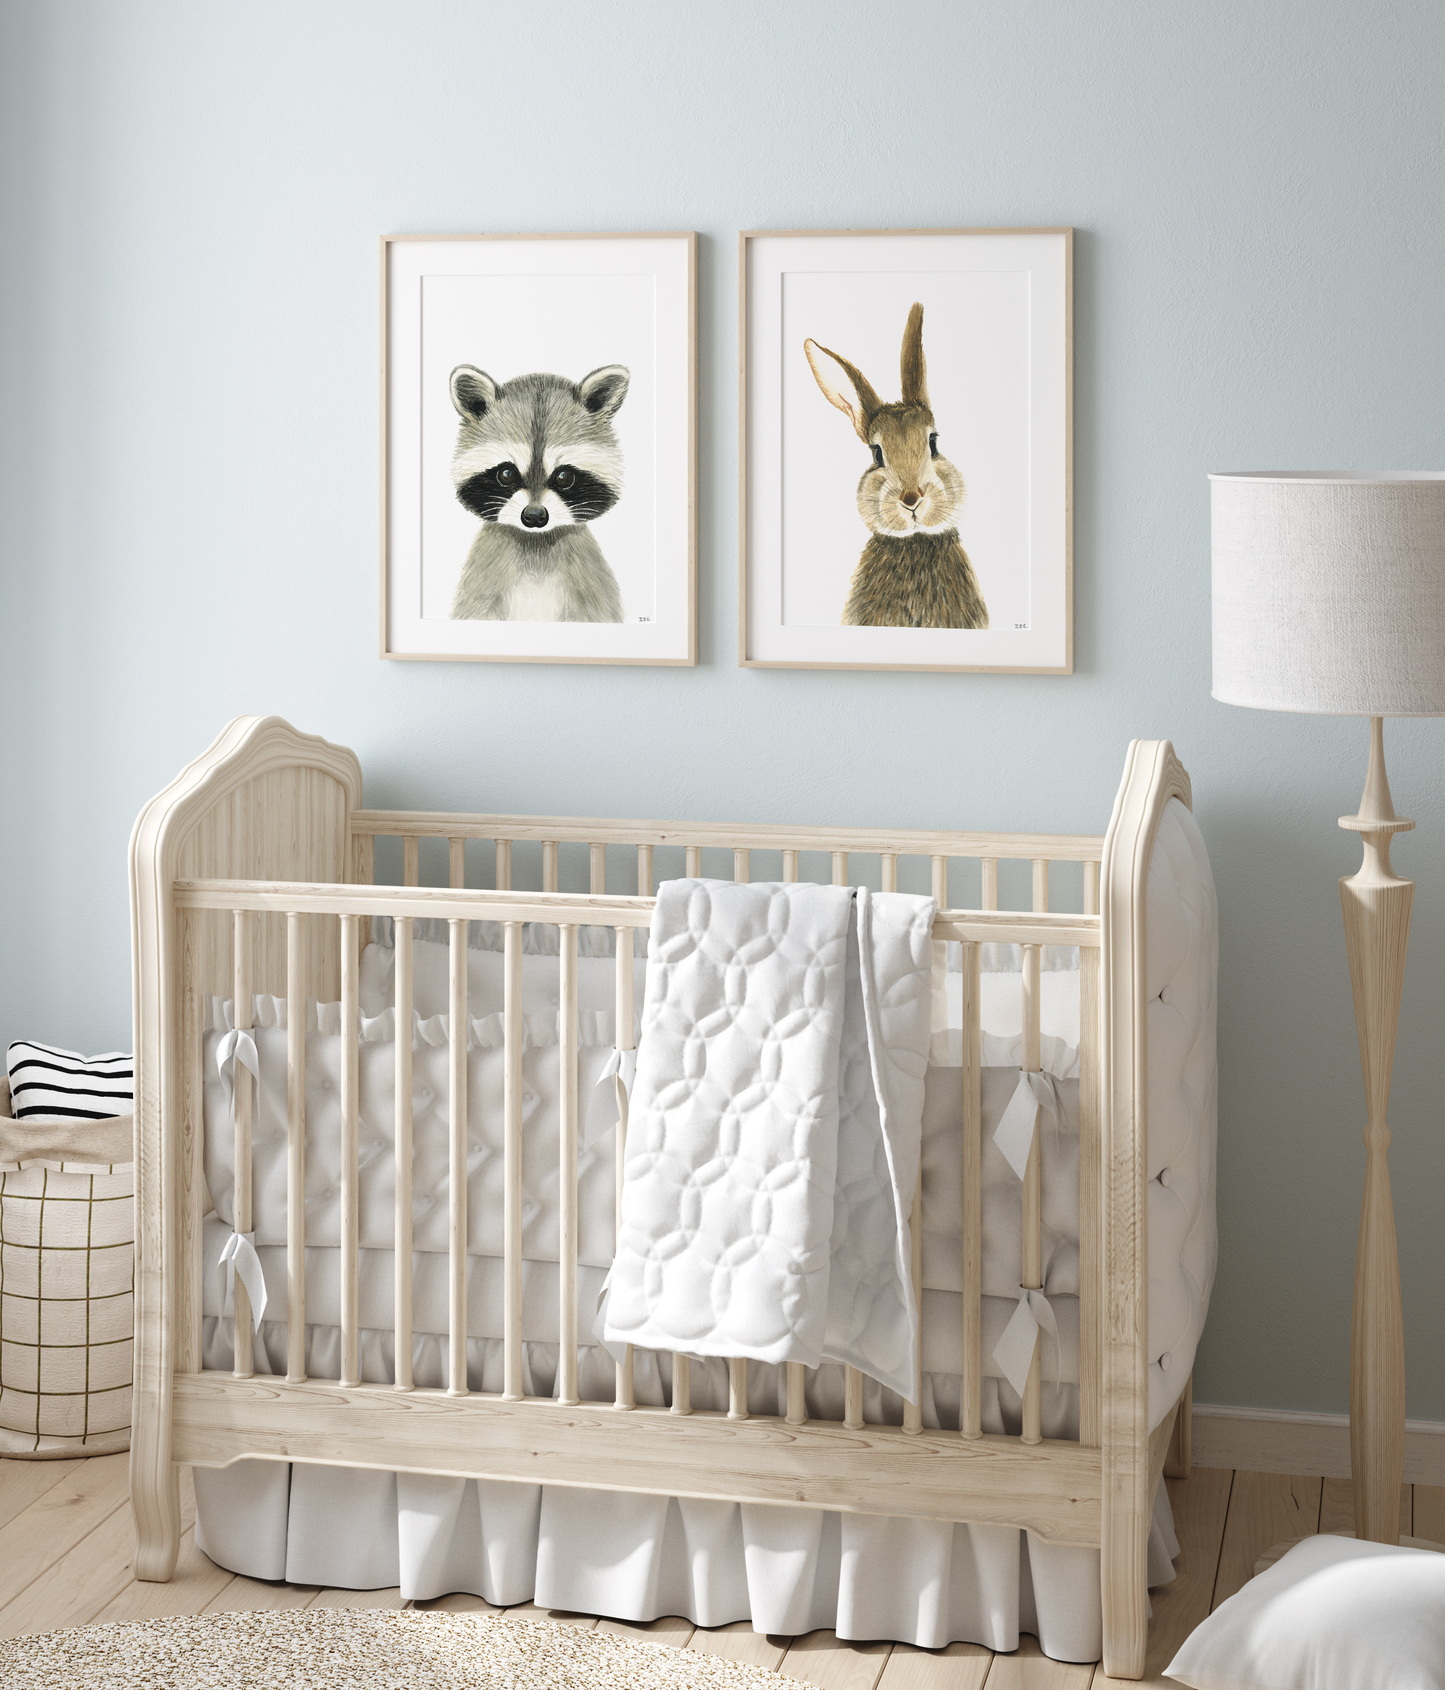 Set of 2 nursery prints in babyroom above baby crib: racoon and rabbit